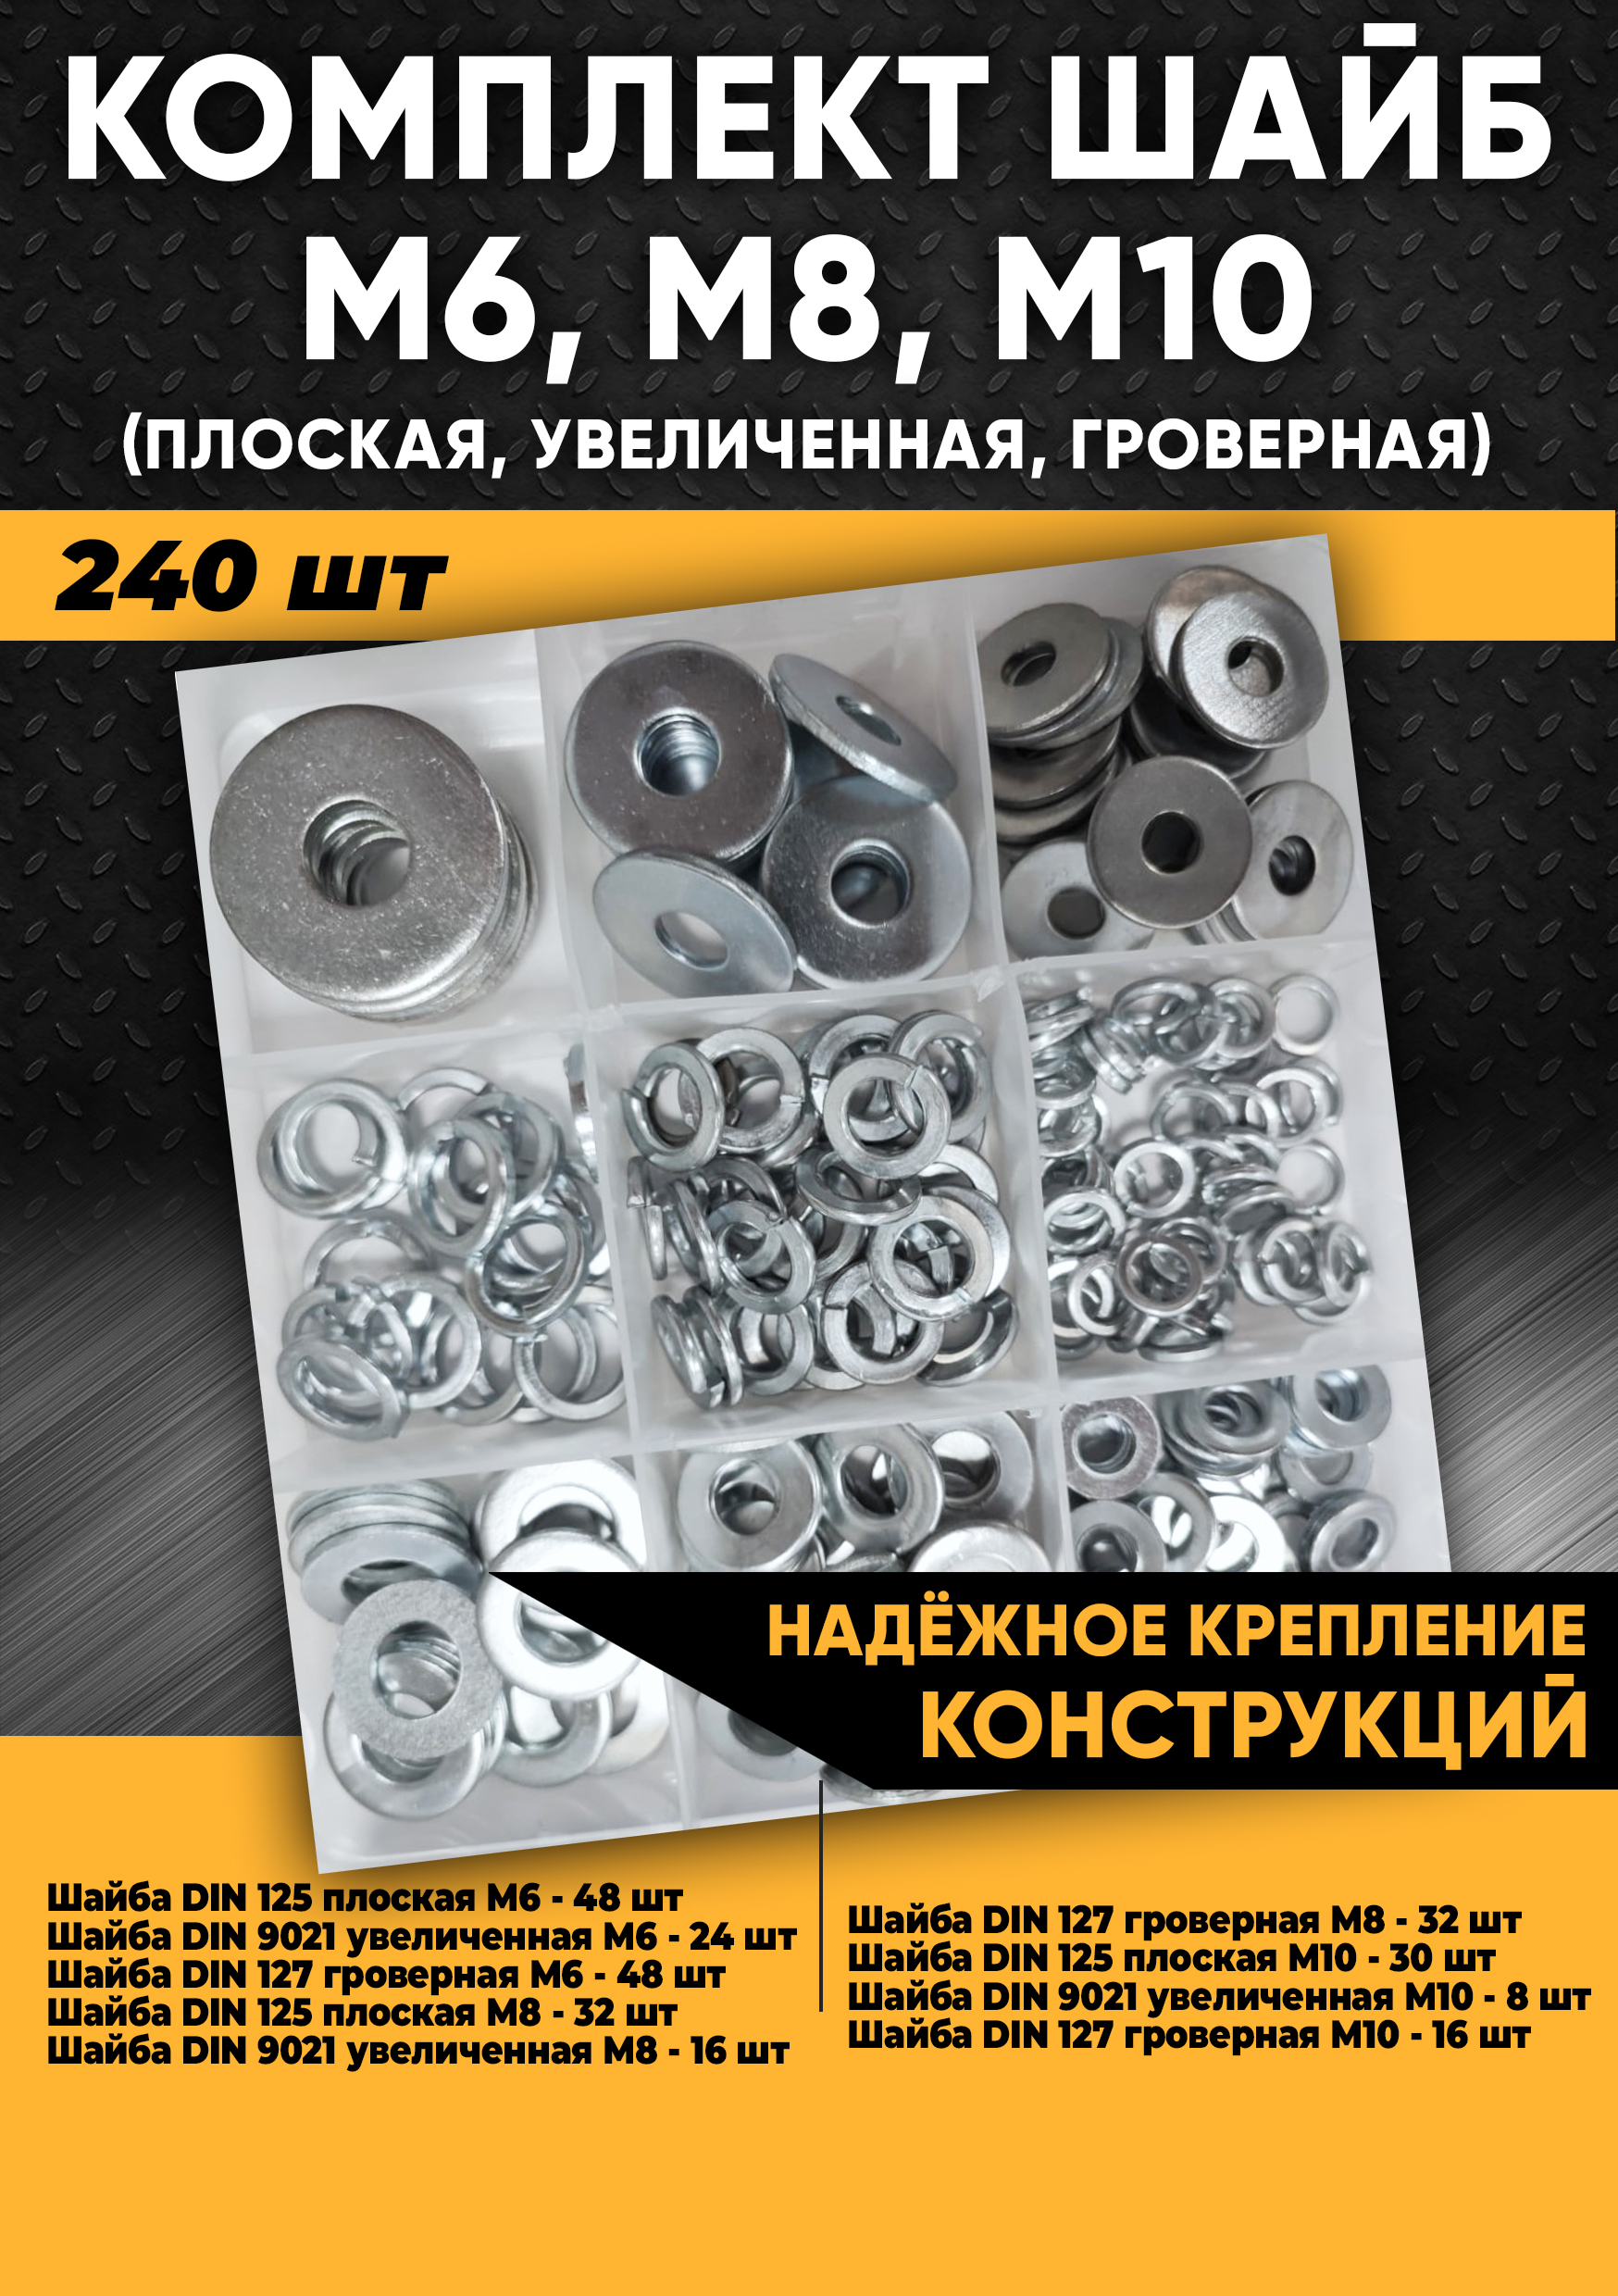 Комплект шайб М6, М8, М10 - 240 шт в органайзере, KraSimall 100259